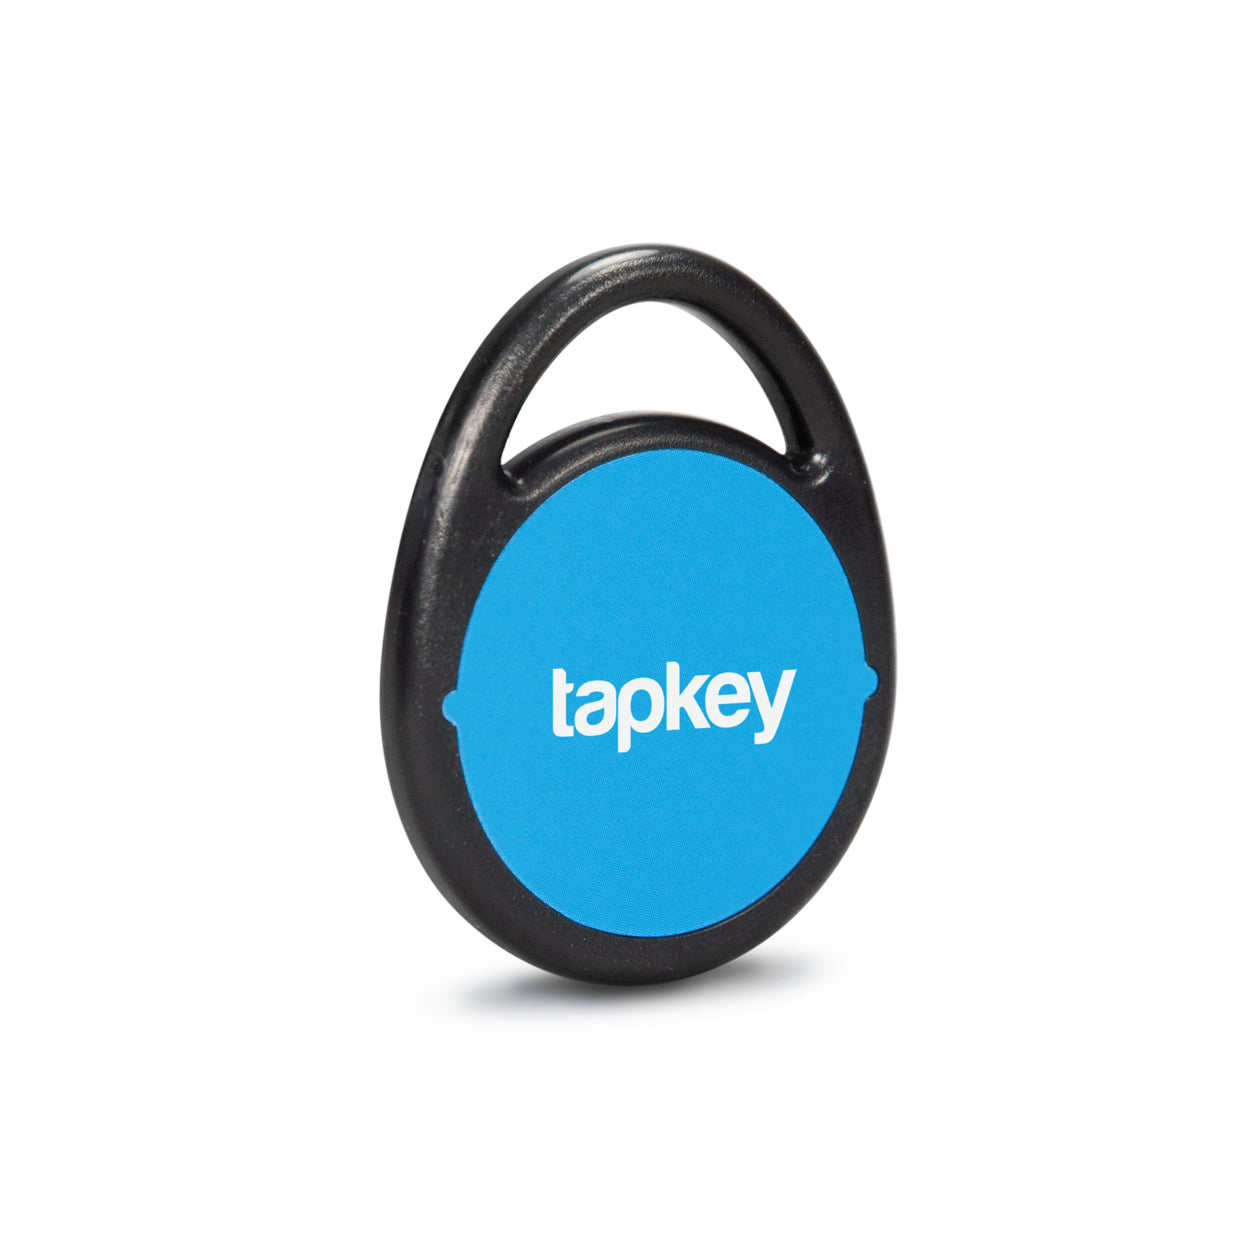 Round, blue NFC Tag with the Tapkey logo on it. | Runder, blauer NFC-Tag mit dem Tapkey-Logo darauf.